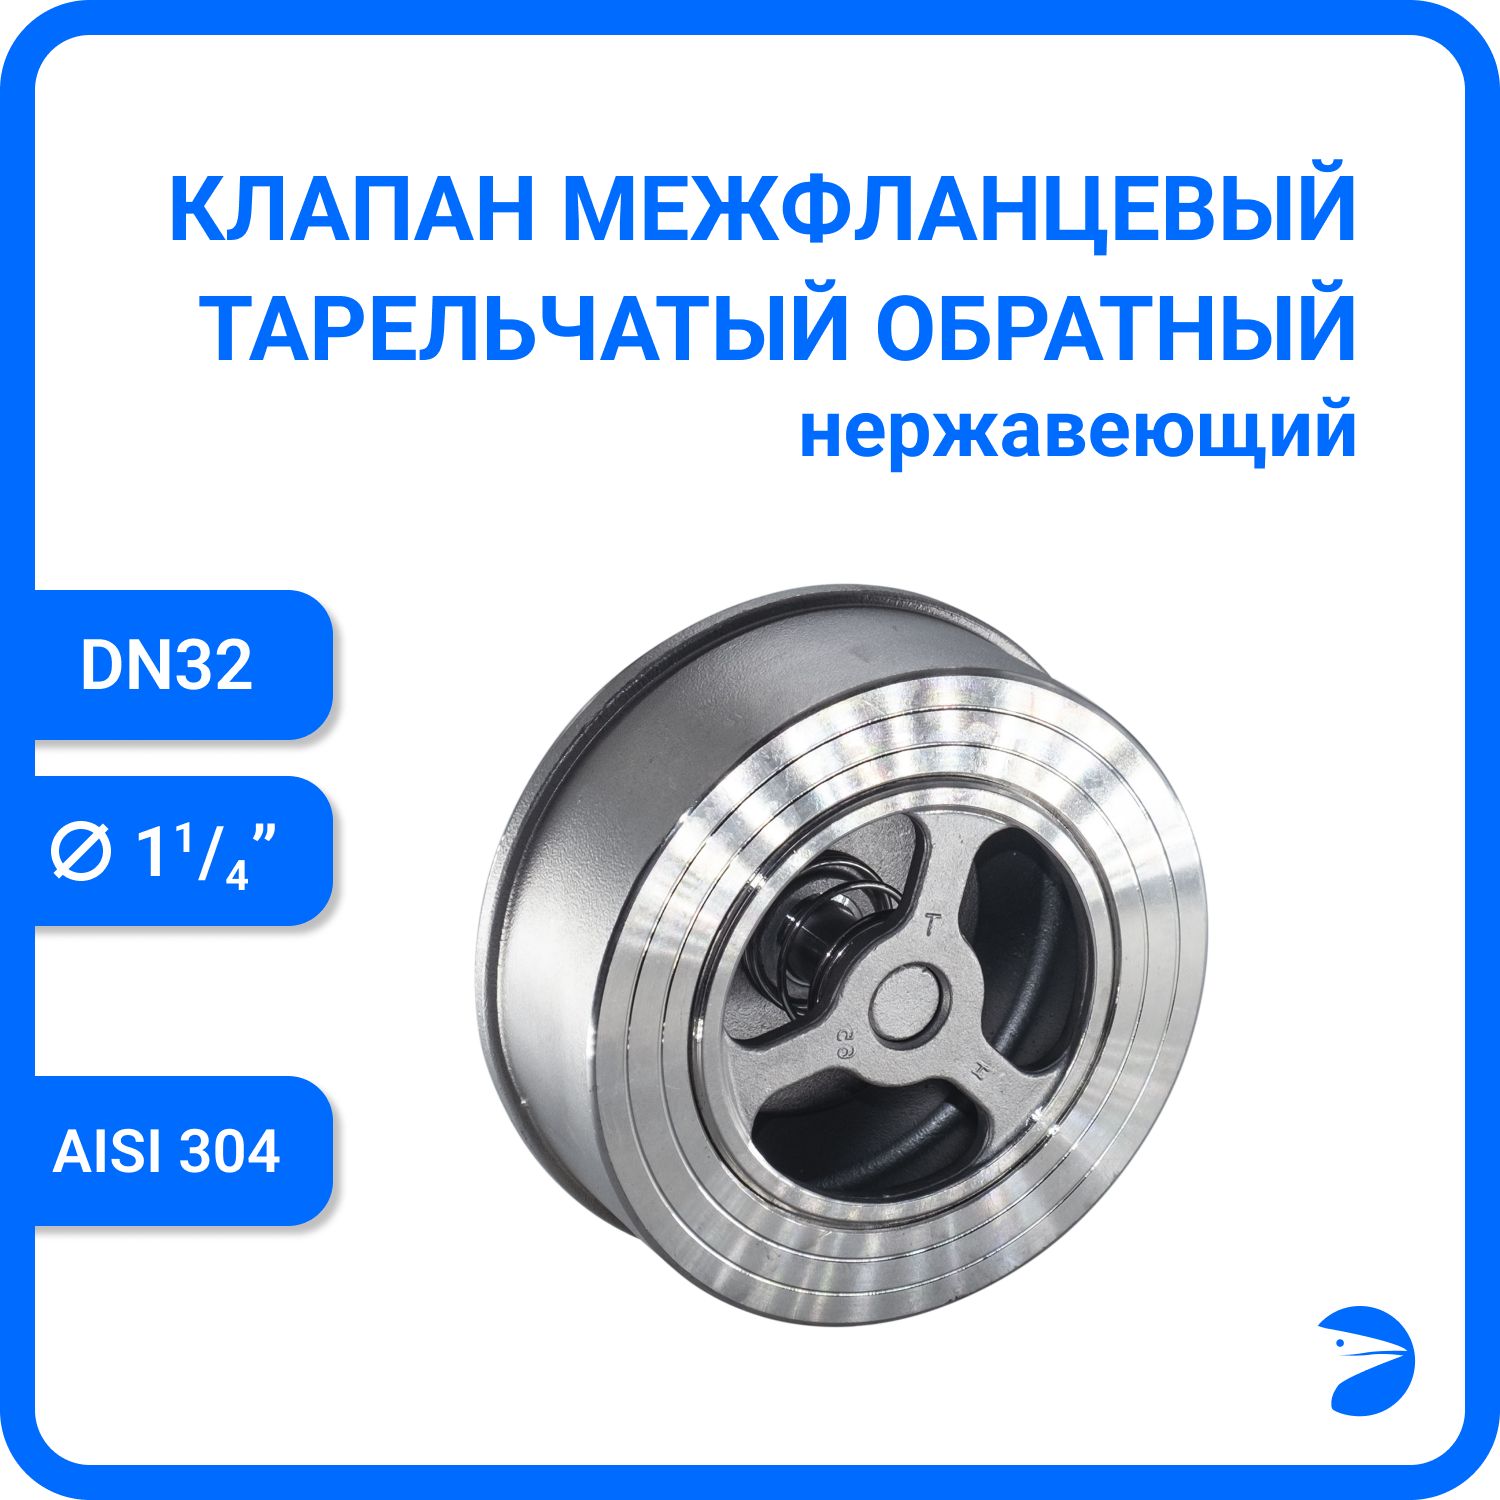 Обратный клапан Newkey нержавеющий, AISI304 DN32 (1_1/4